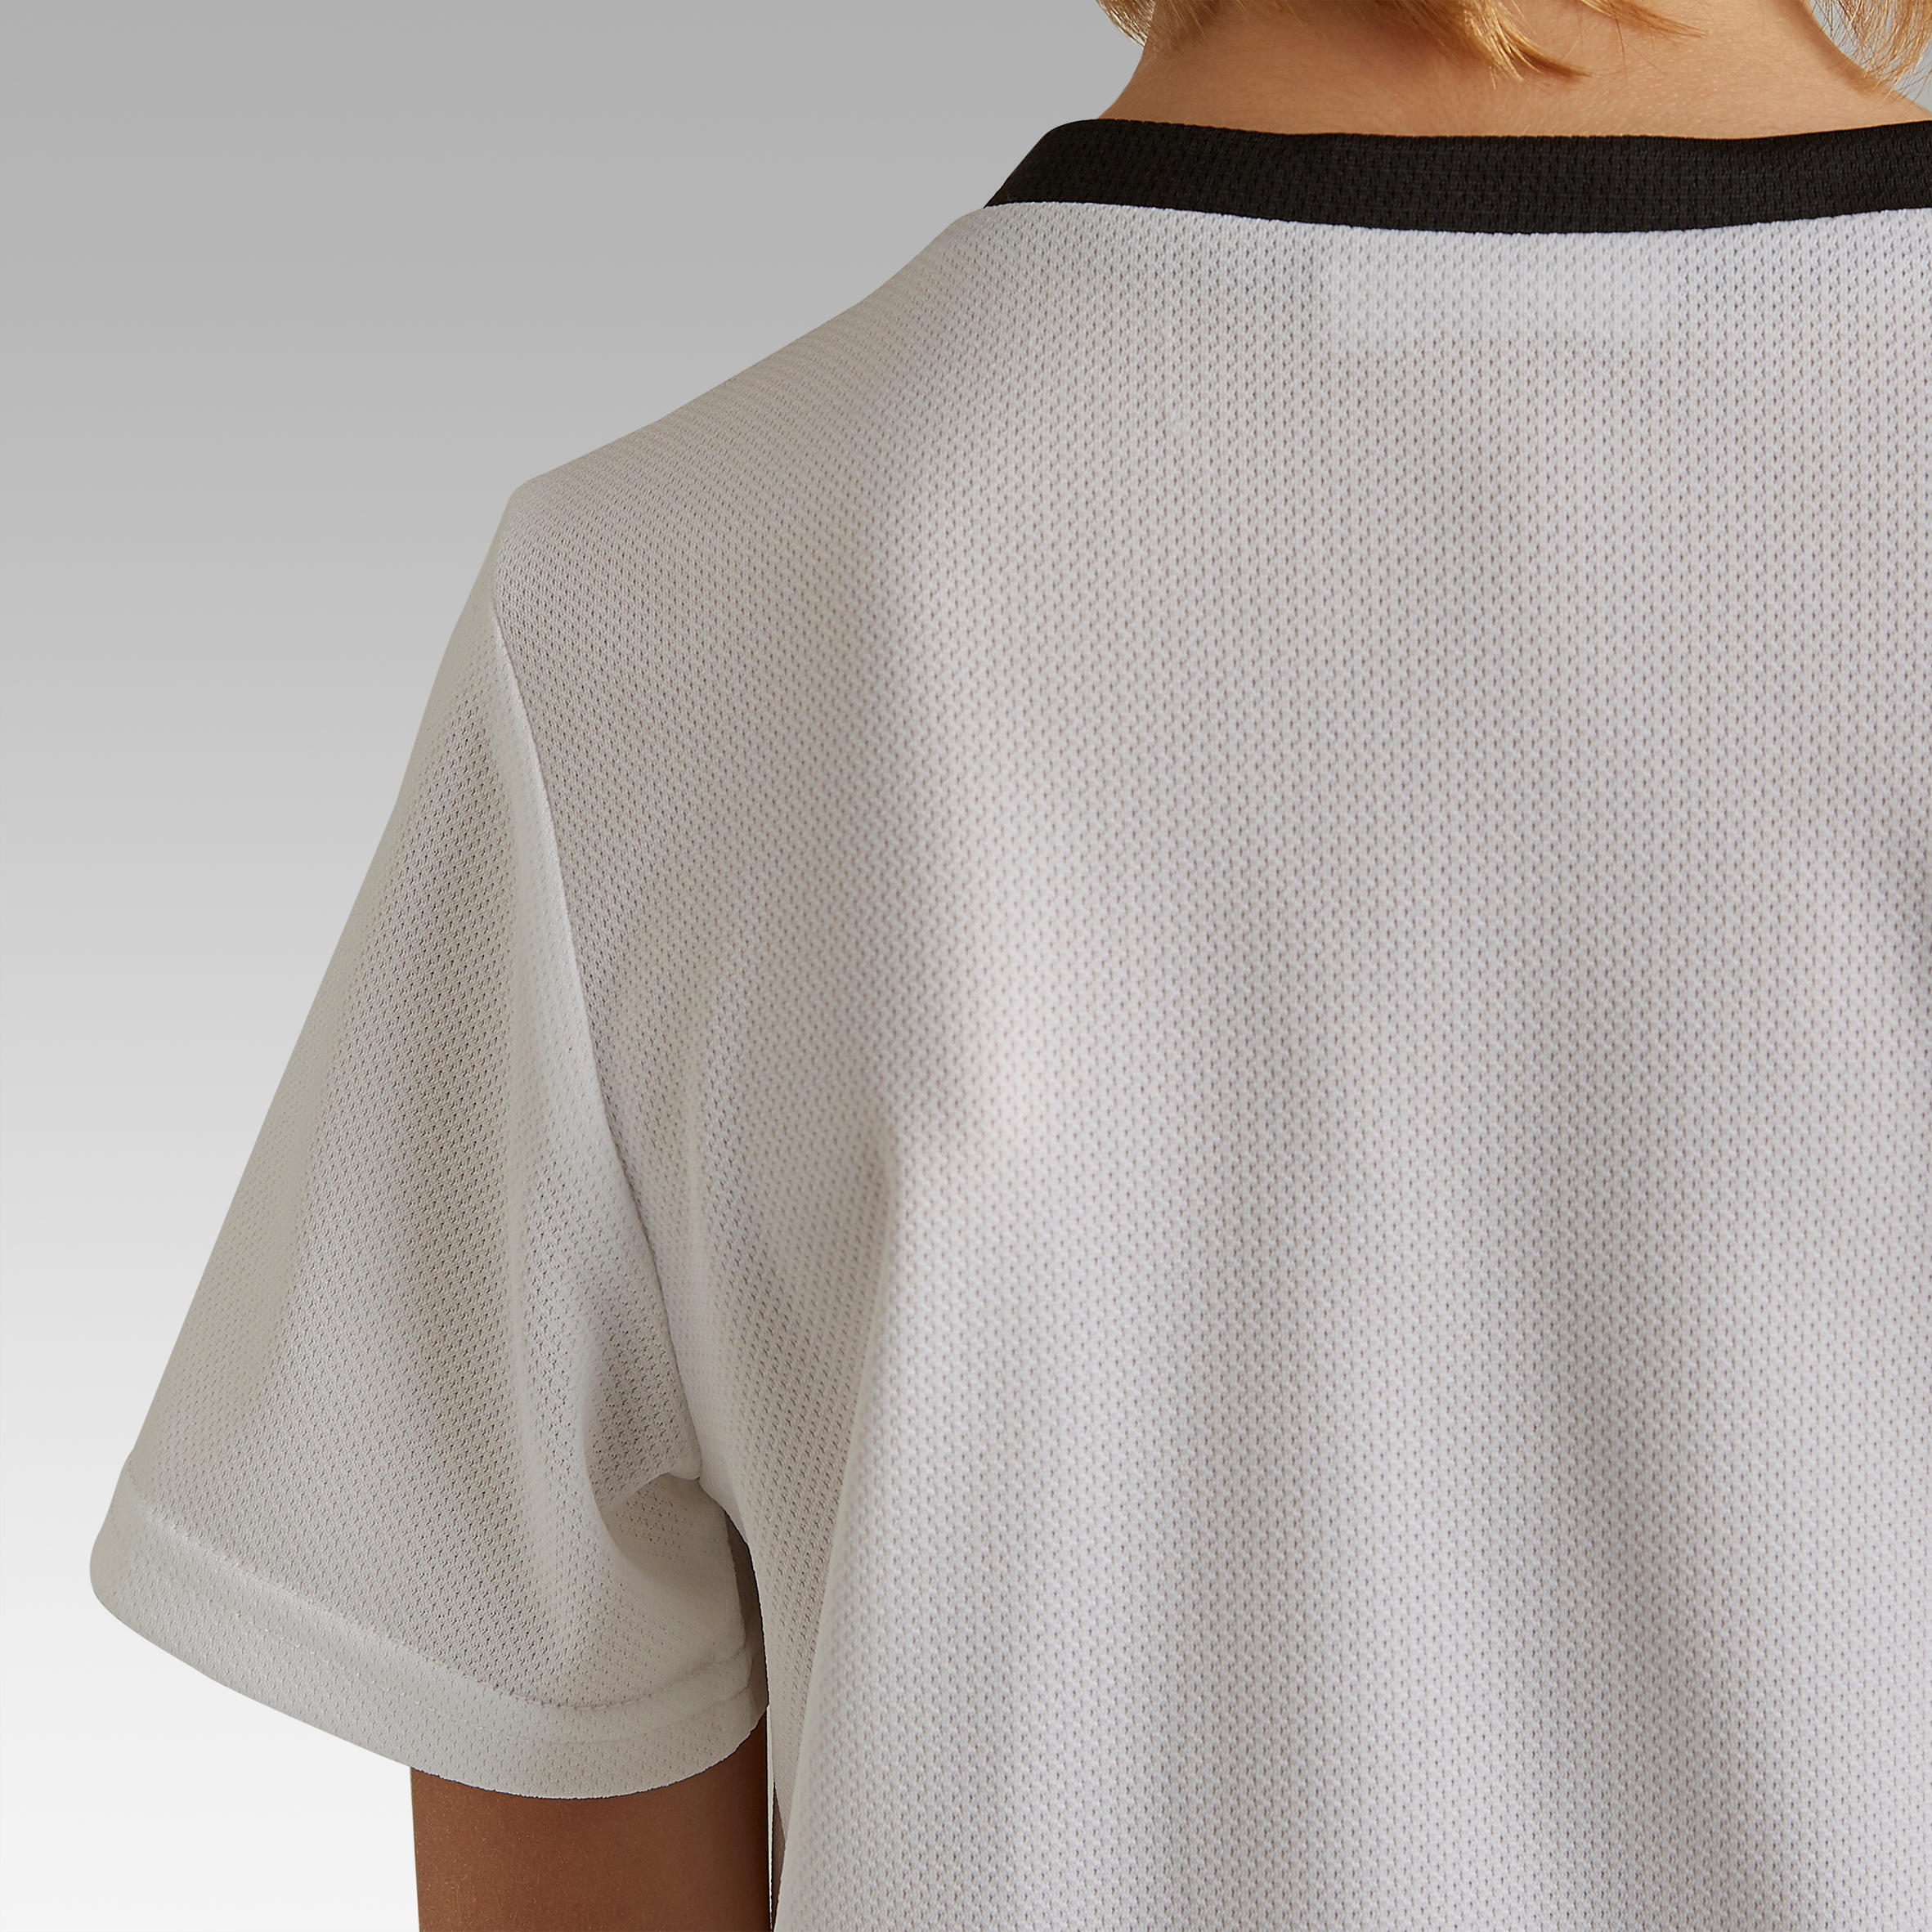 Refurbished Kids Football Shirt Essential - White - A Grade 6/7